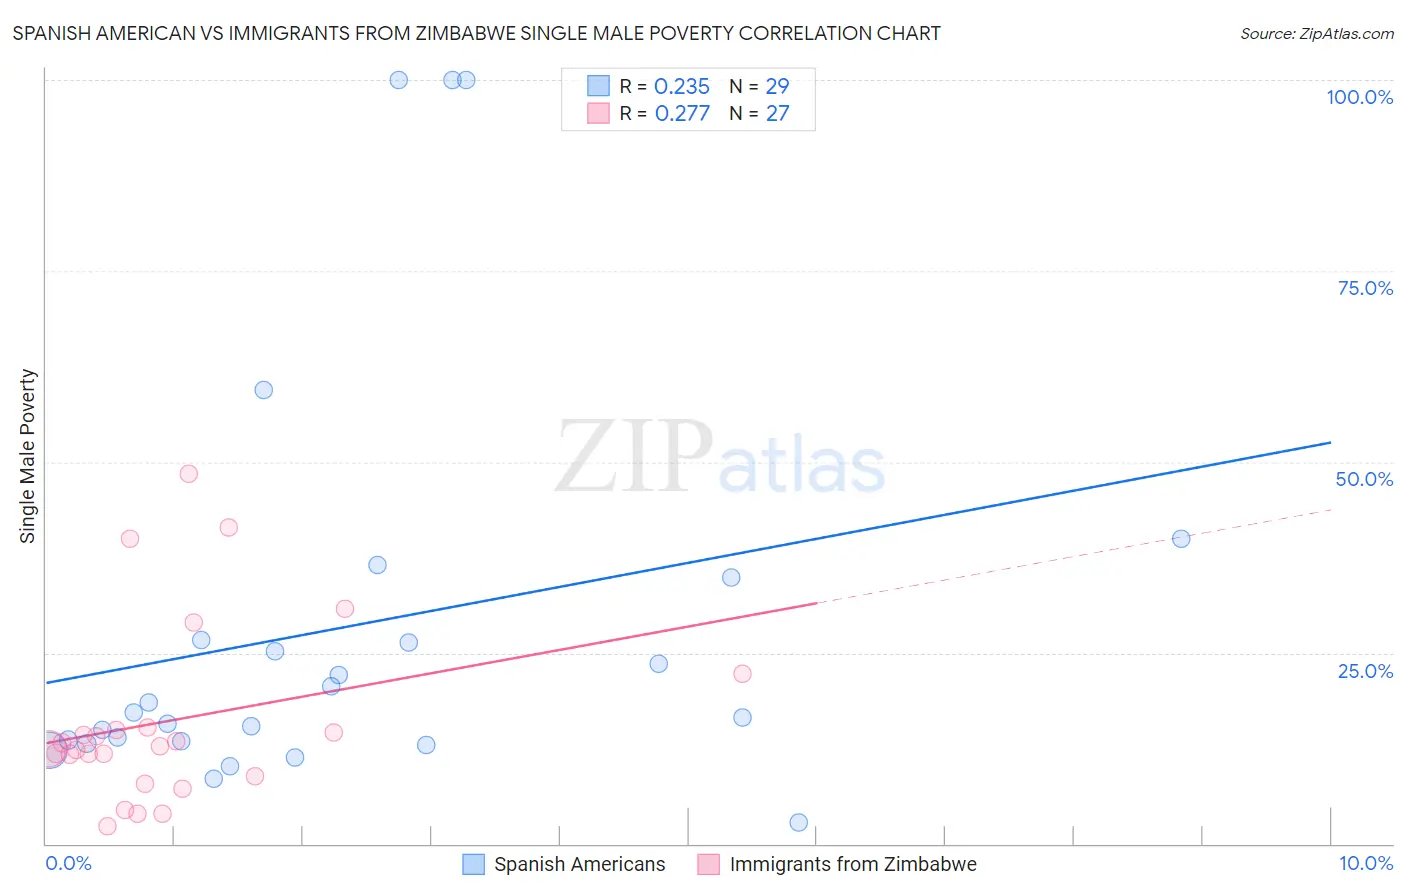 Spanish American vs Immigrants from Zimbabwe Single Male Poverty